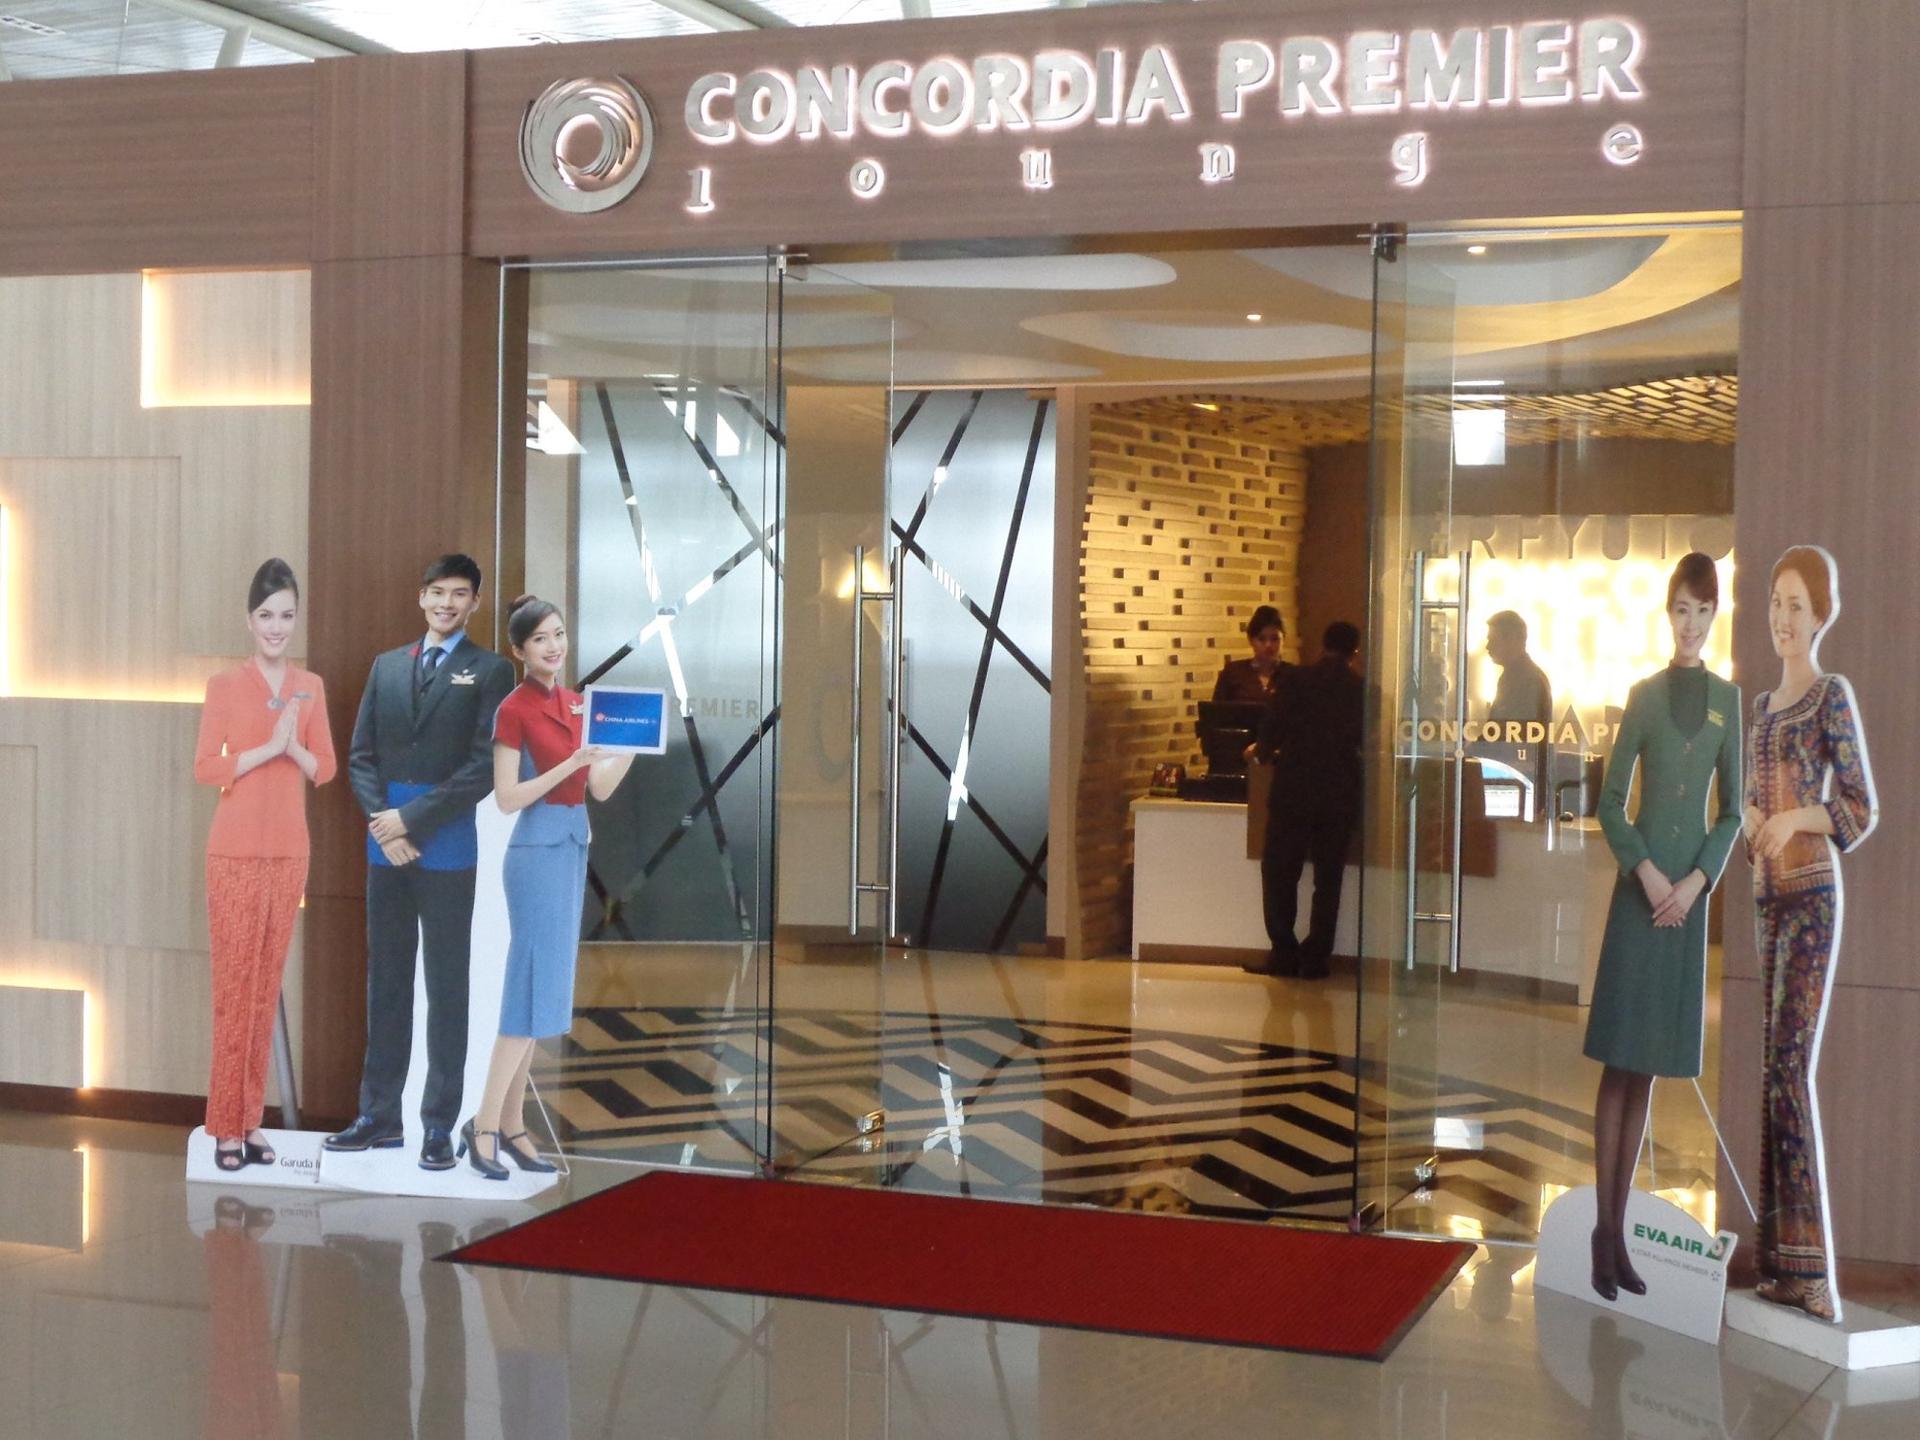 Concordia Premier Lounge image 69 of 81